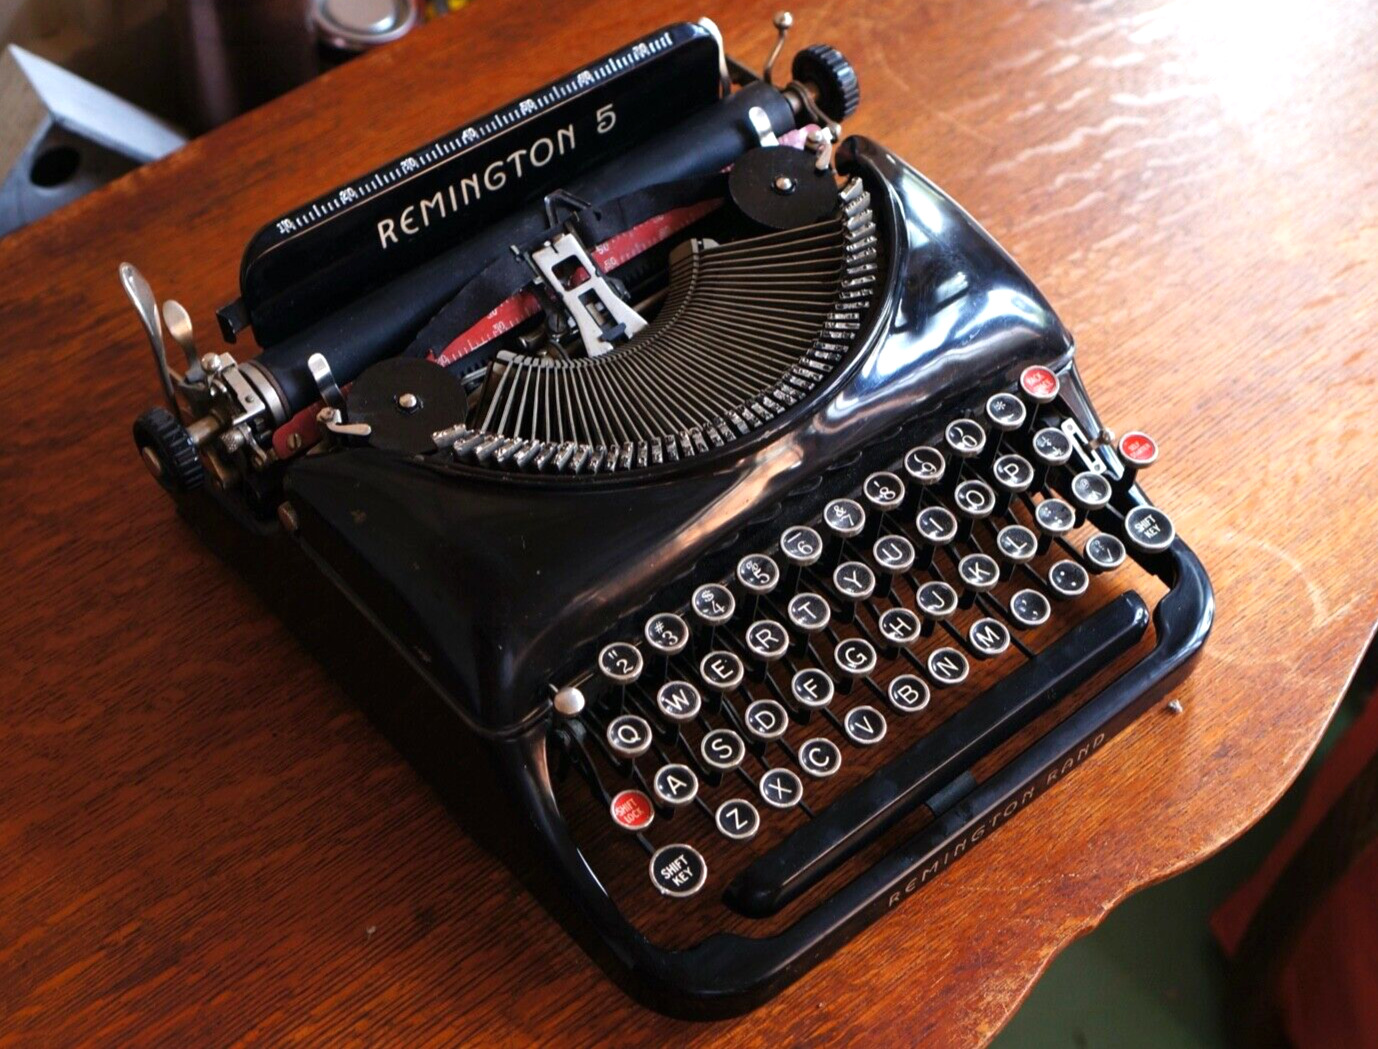 Remington 5 Black Vintage Typewriter ~ Beautiful Antique in Great Condition